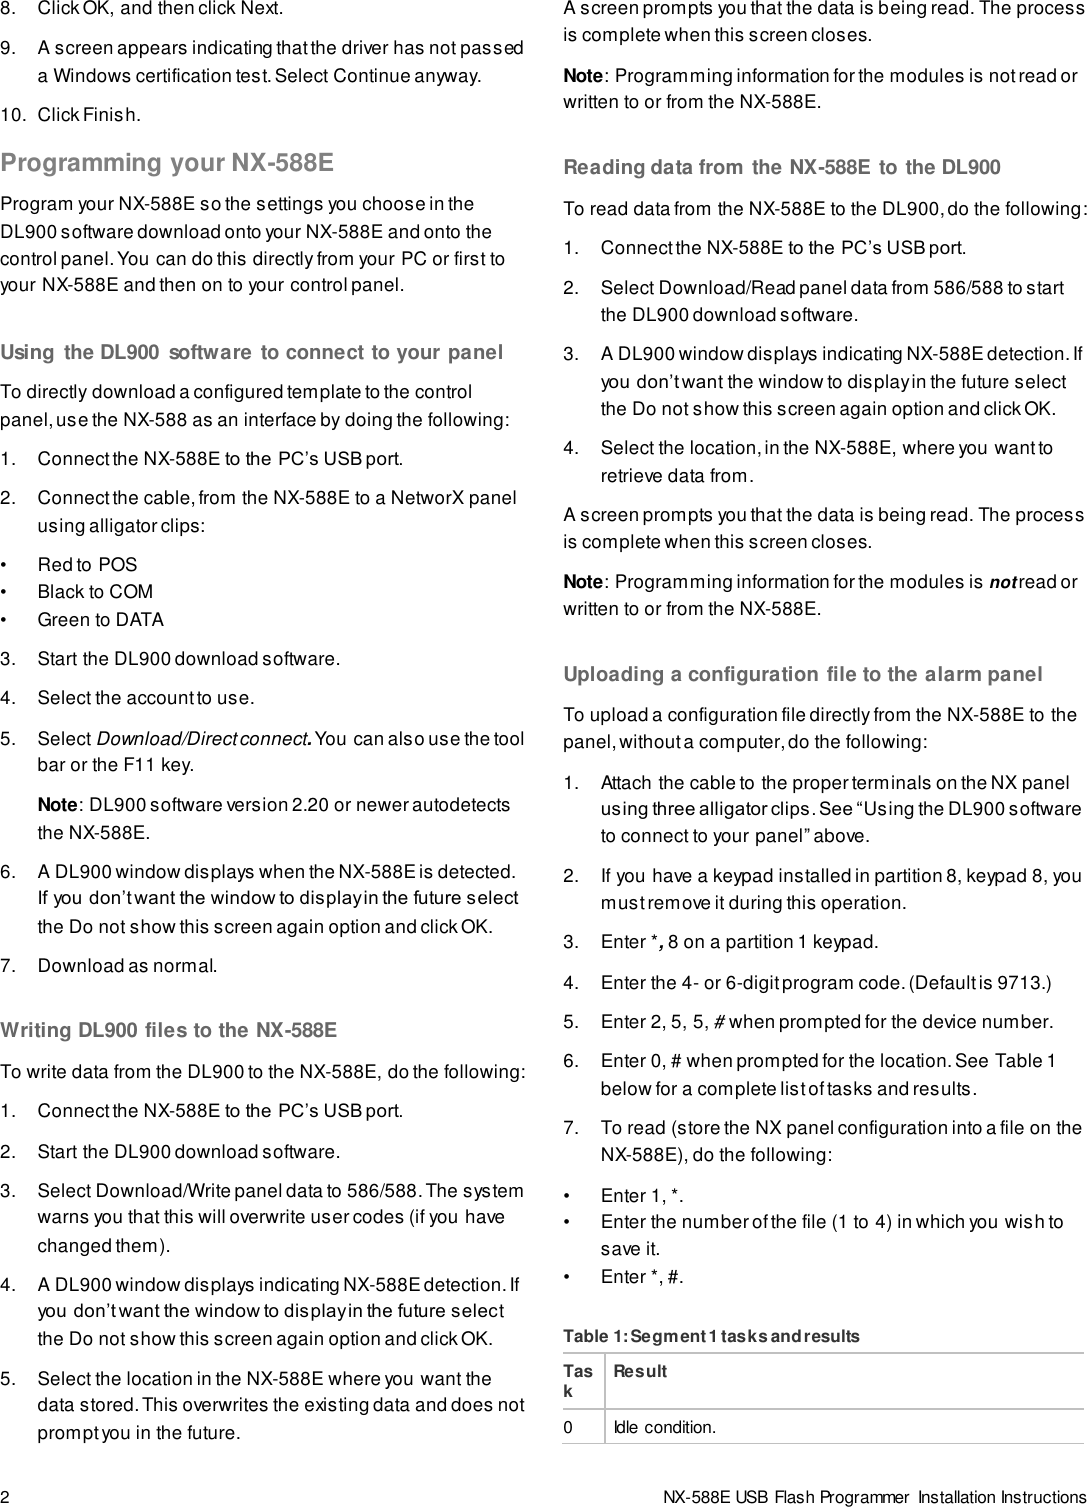 Page 2 of 5 - NX-588E USB Flash Programmer Installation Instructions  466-2257 REV C